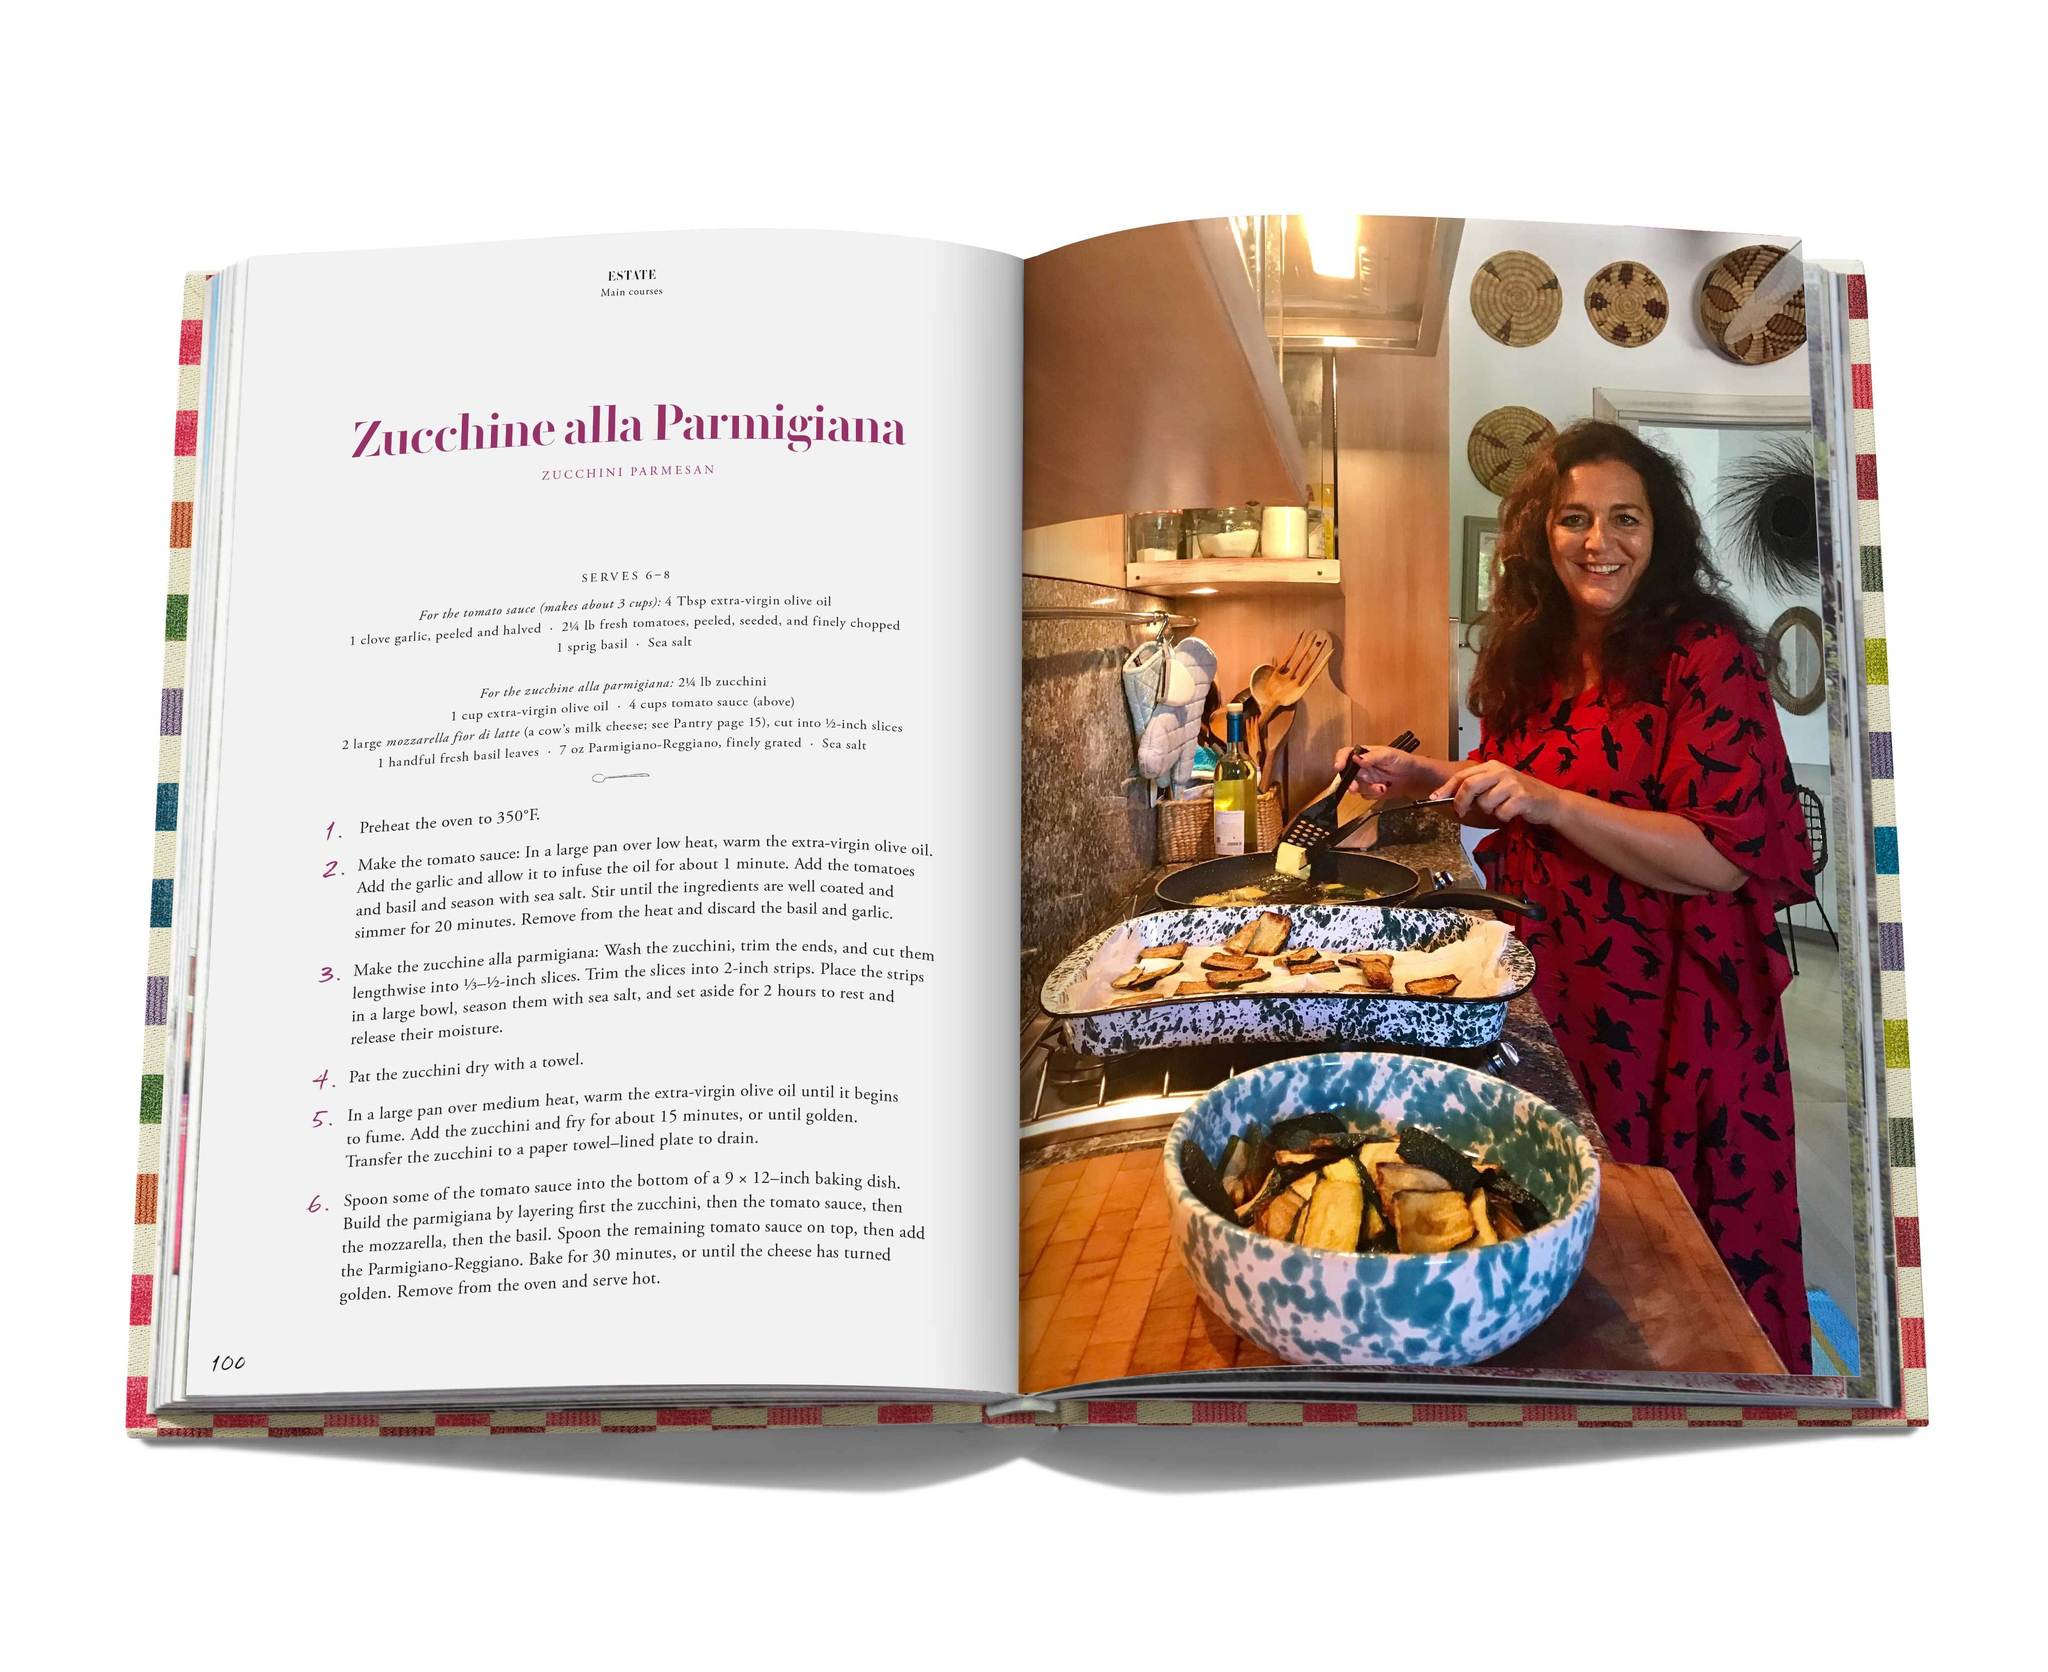 ASSOULINE Missoni Family Hardcover Cookbook by Francesco Maccapani Missoni